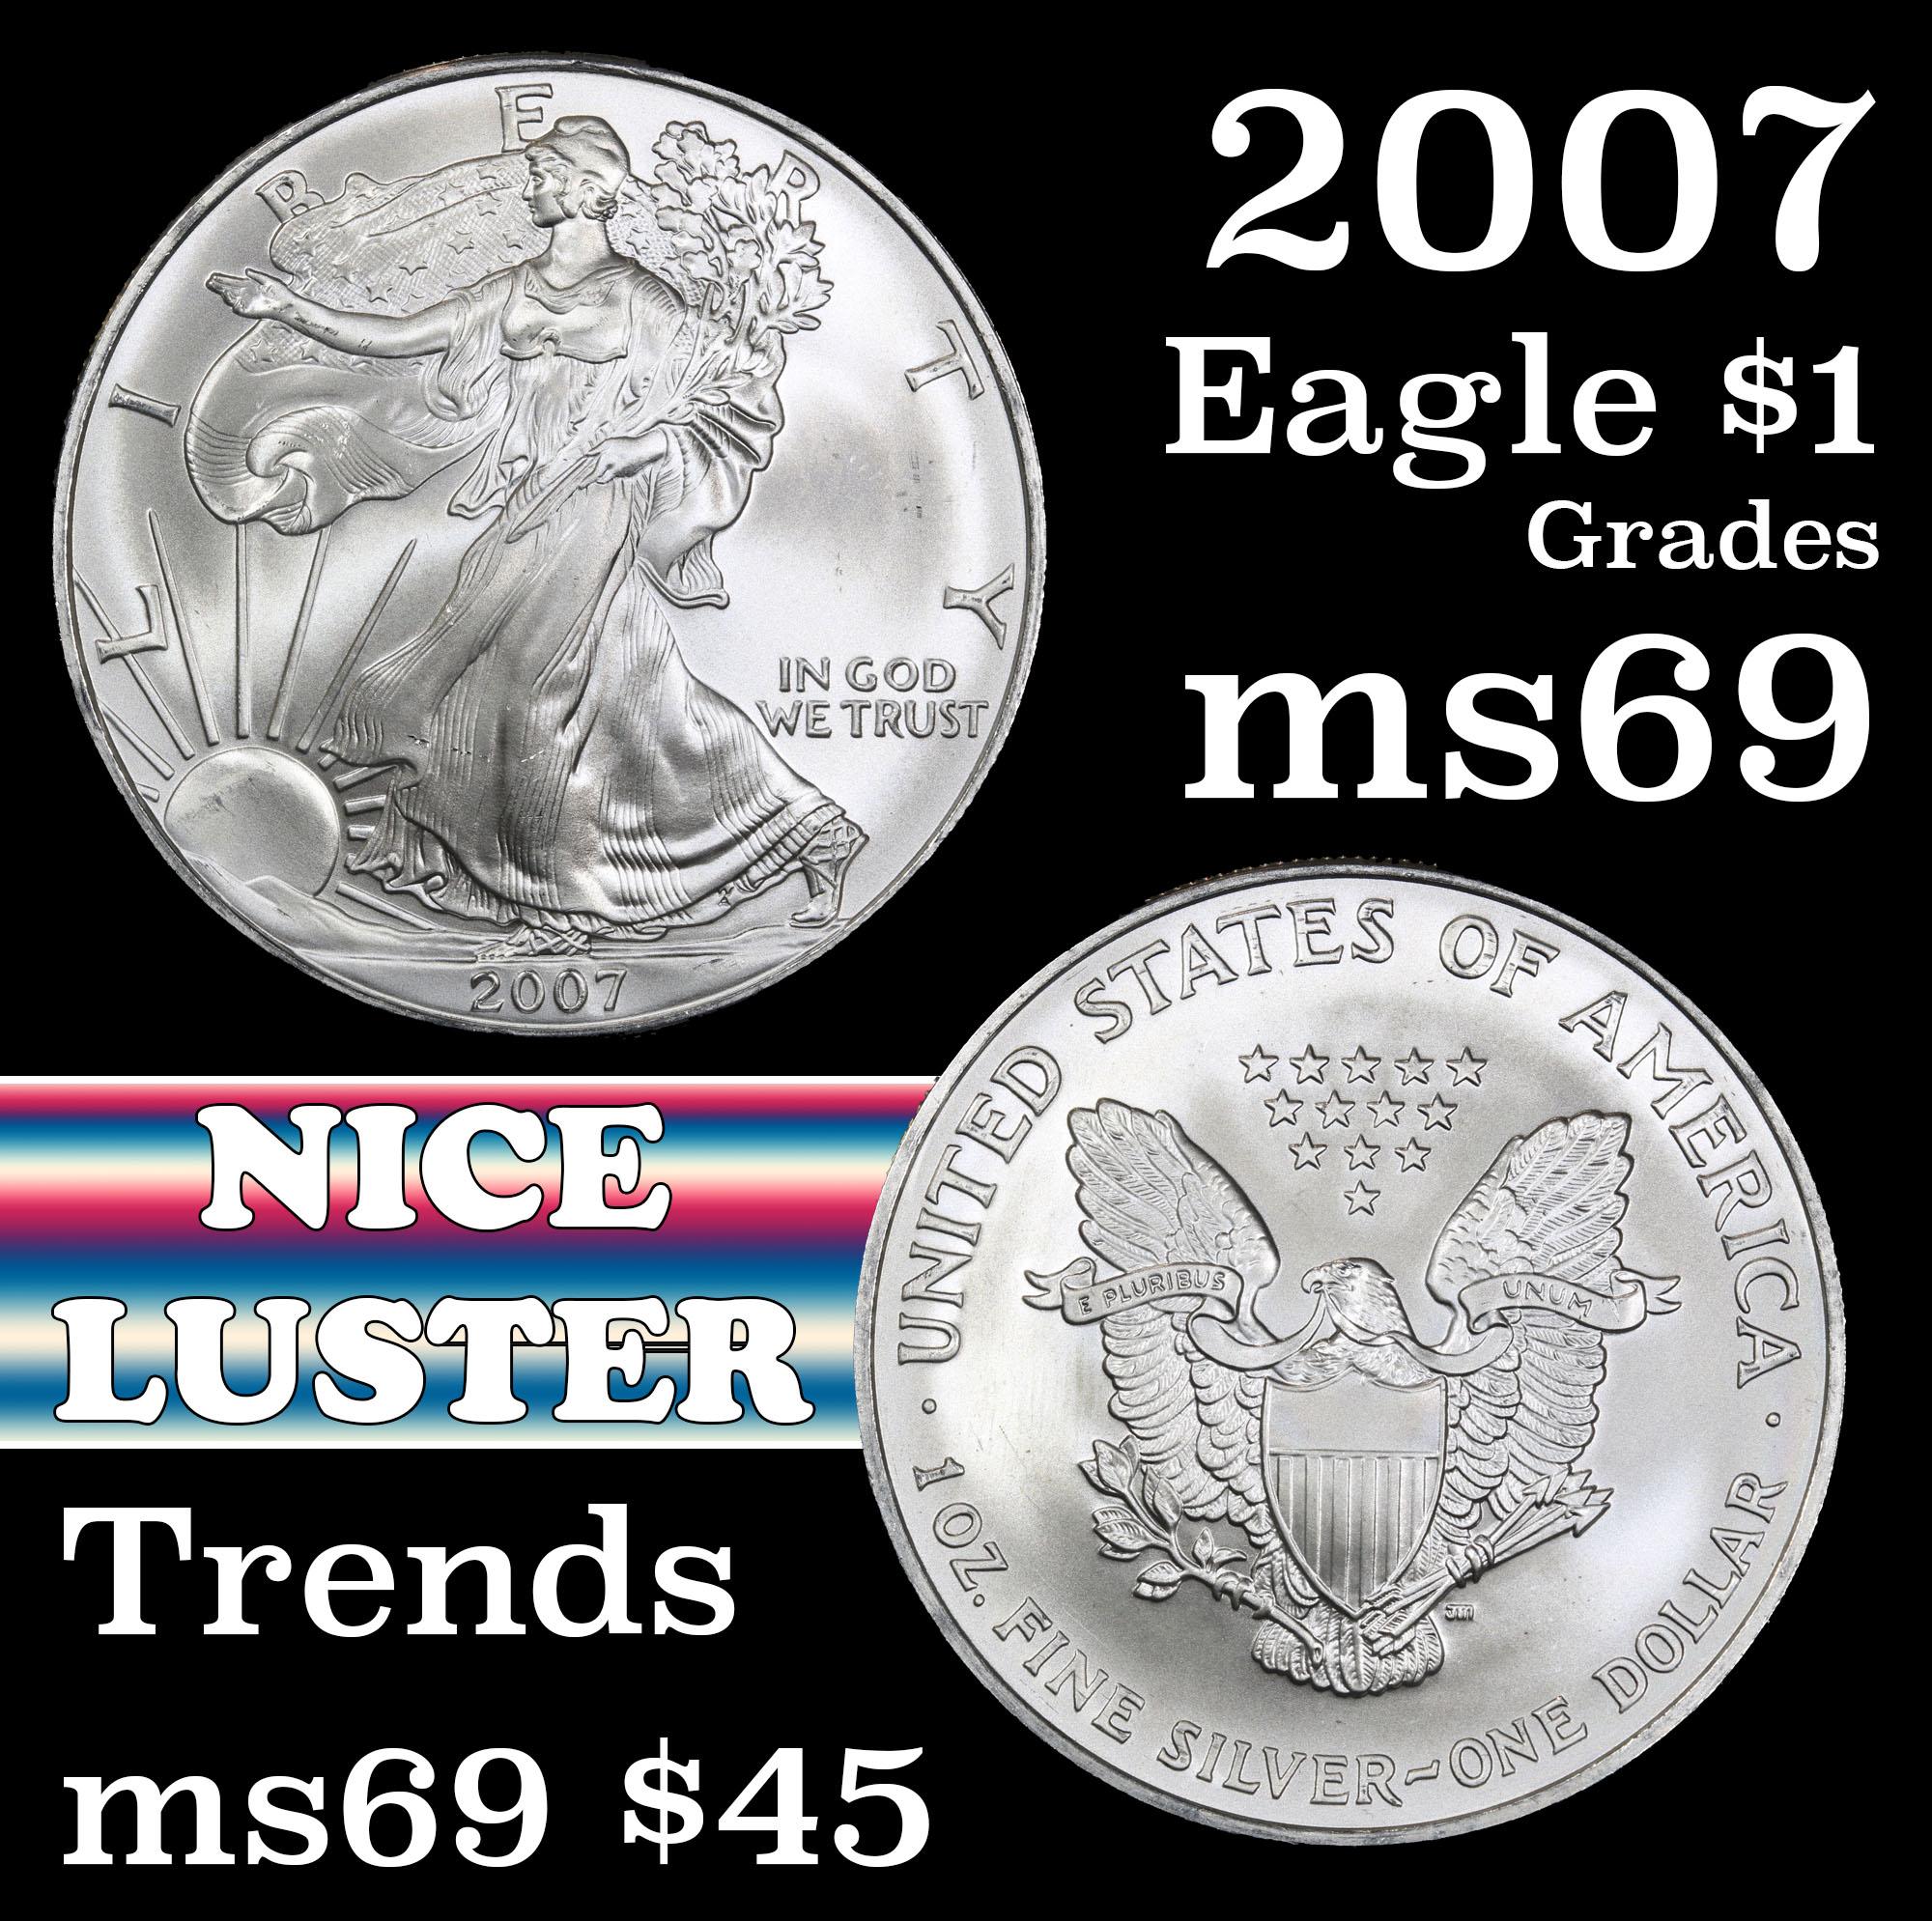 2007 Silver Eagle Dollar $1 Grades ms69